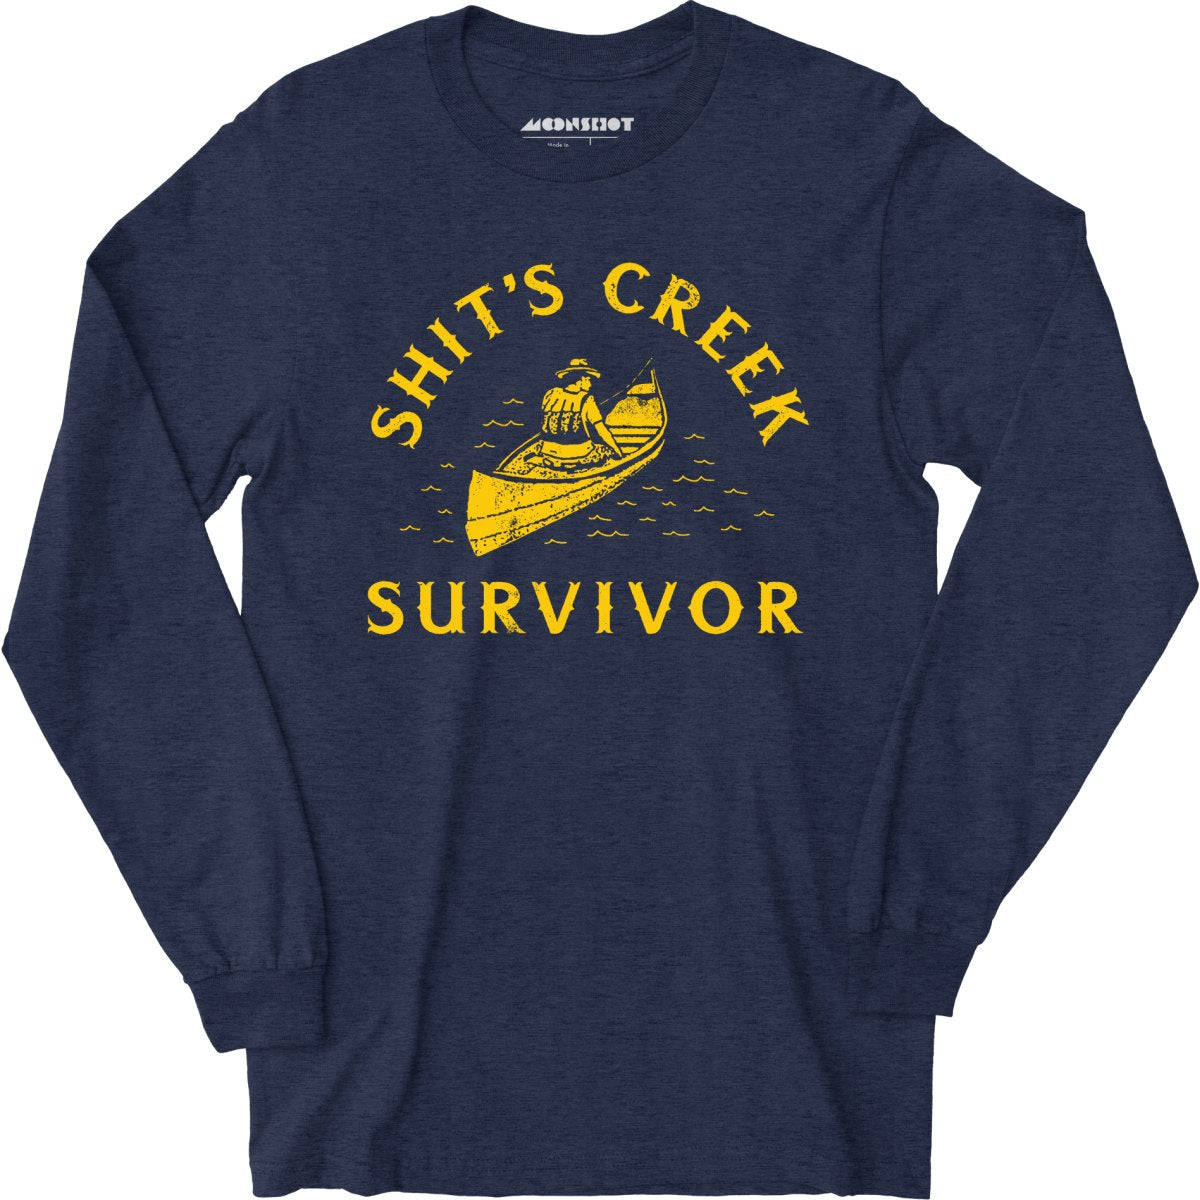 Shit's Creek Survivor - Long Sleeve T-Shirt